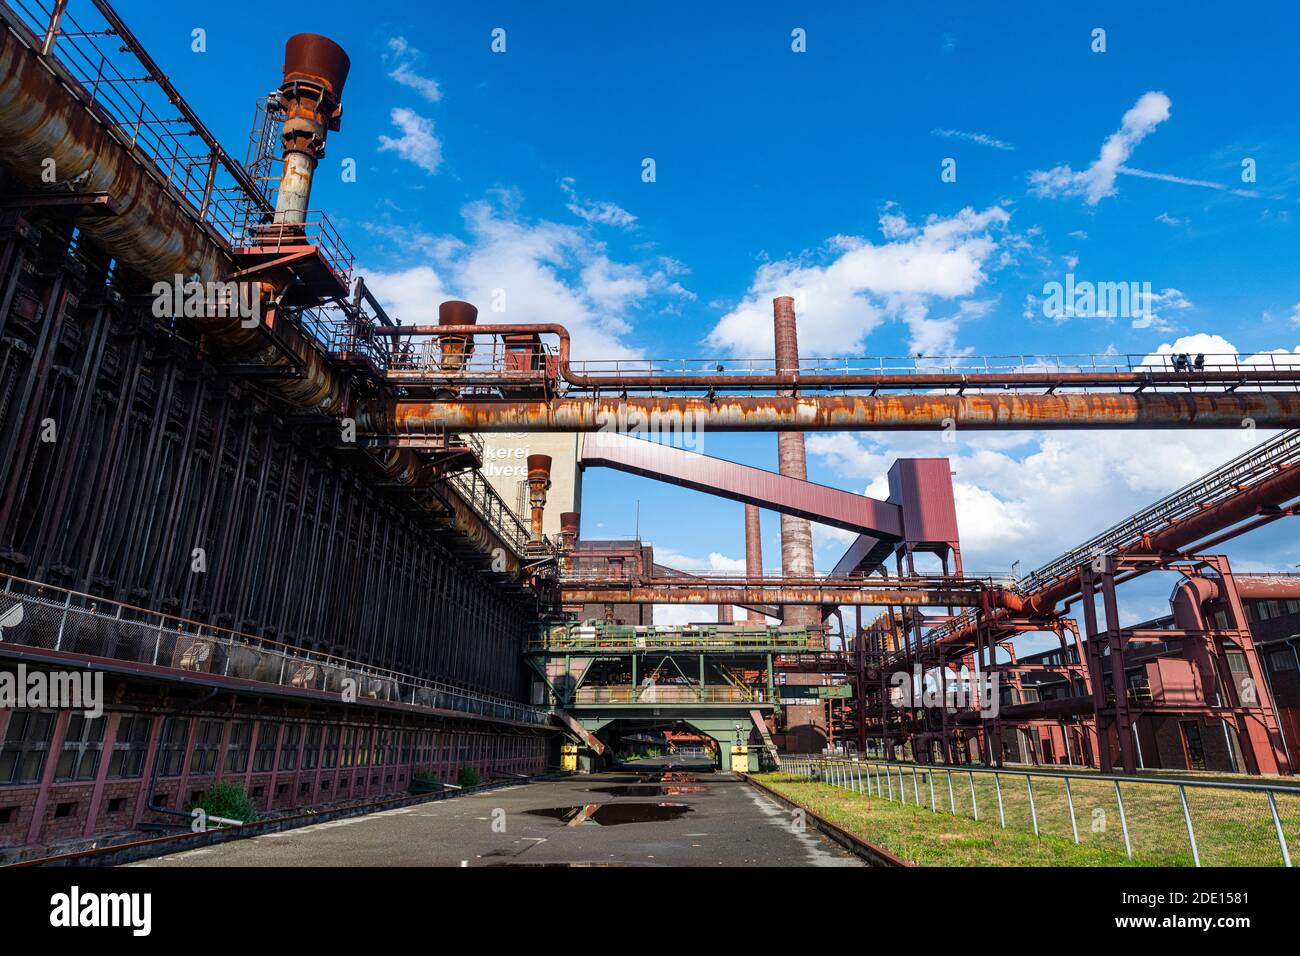 Coking Plant, Zollverein Coal Mine Industrial Complex, UNESCO World Heritage Site, Essen, Ruhr, North Rhine-Westphalia, Germany, Europe Stock Photo